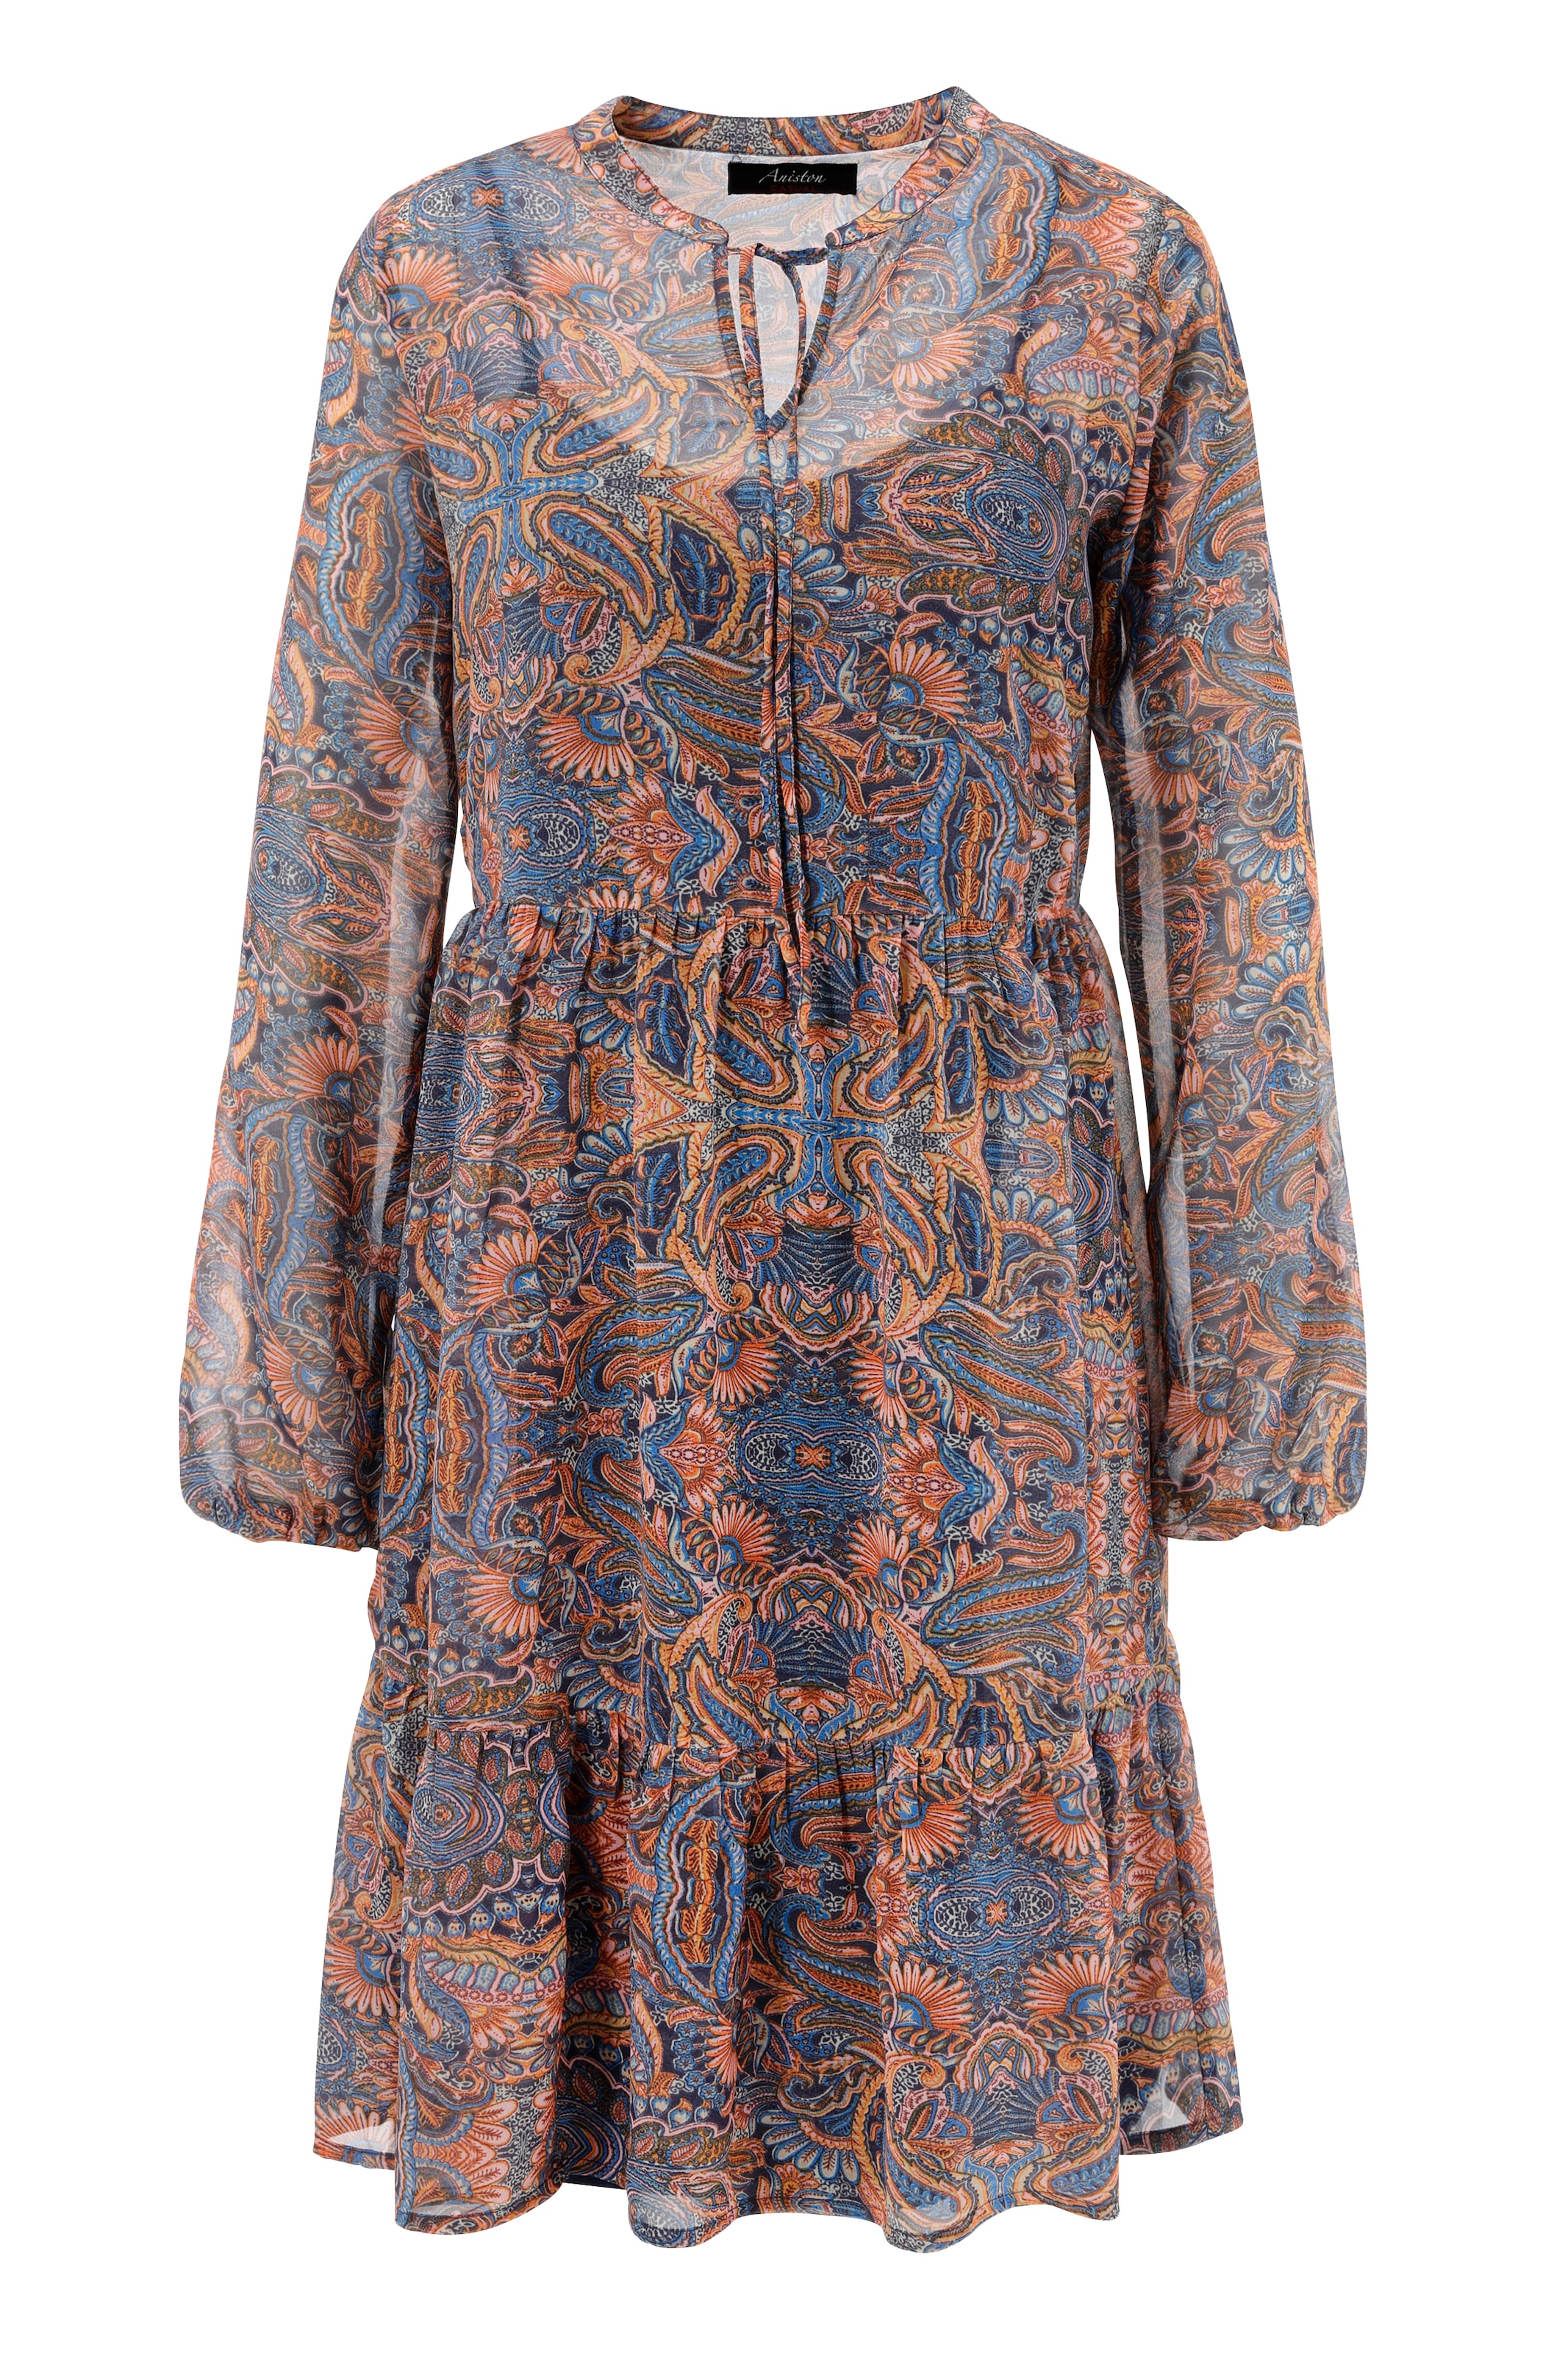 Aniston Paisley-Muster mit bedruckt online CASUAL phantasievollem Blusenkleid, bei